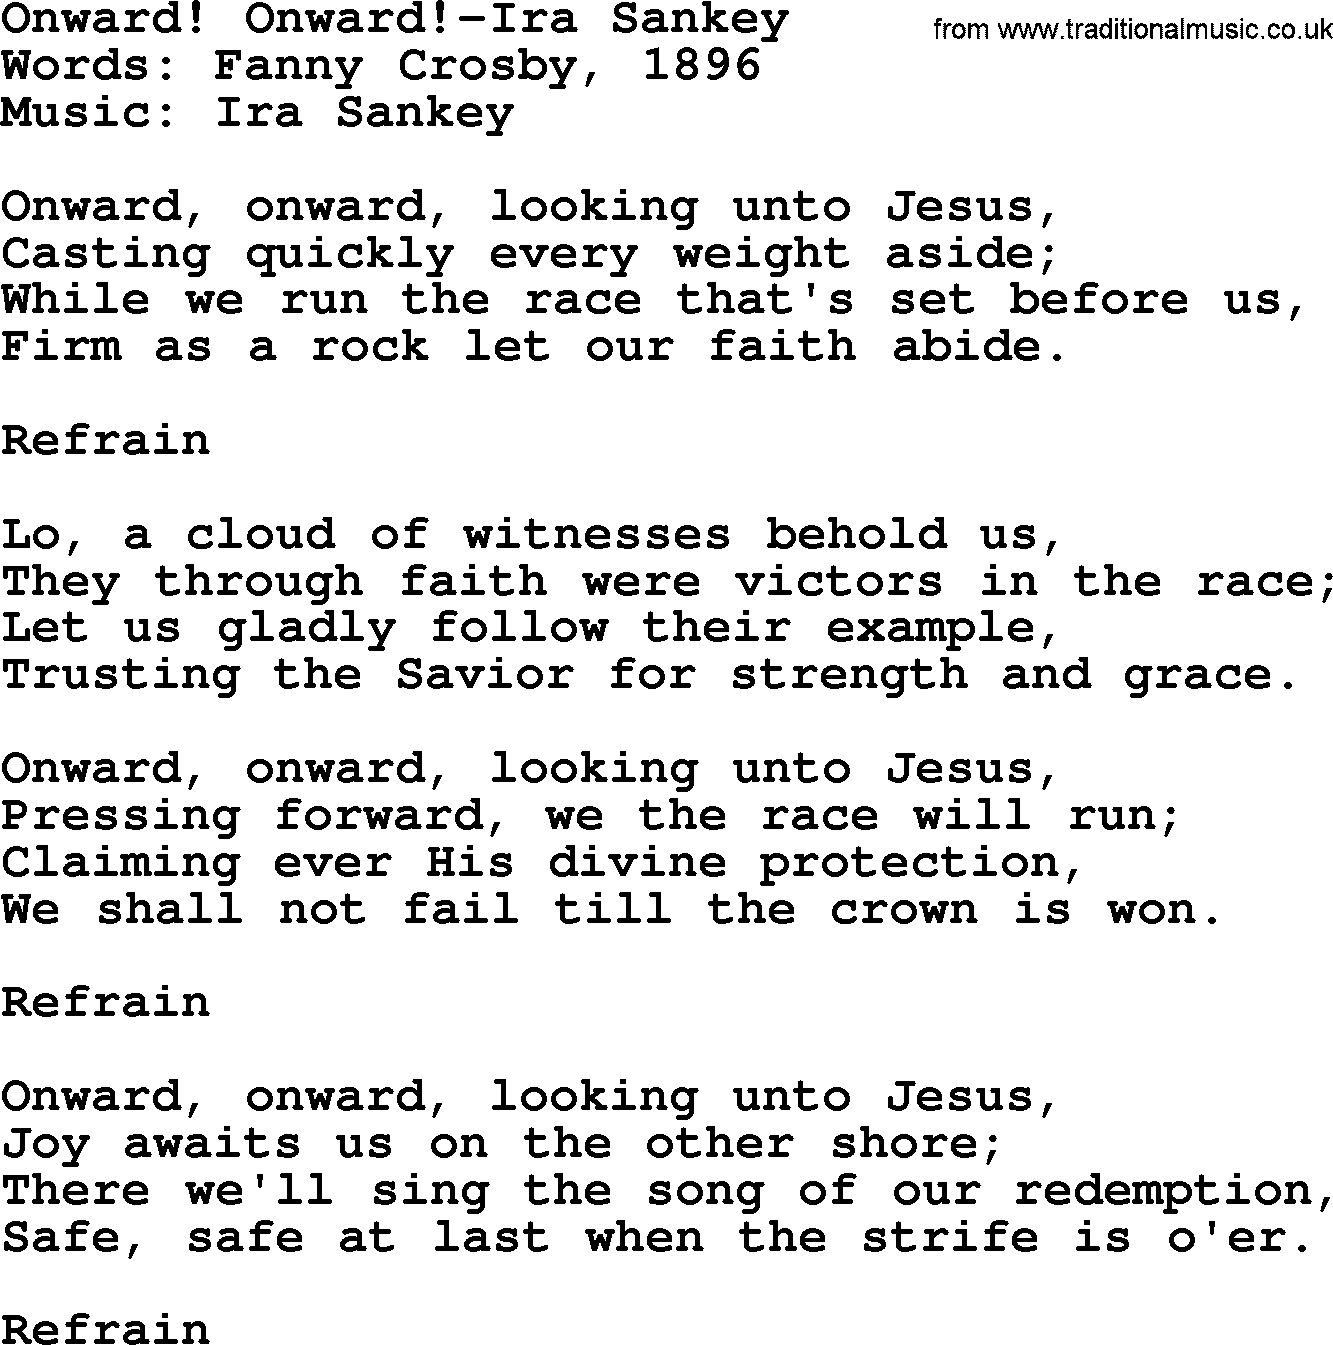 Ira Sankey hymn: Onward! Onward!-Ira Sankey, lyrics